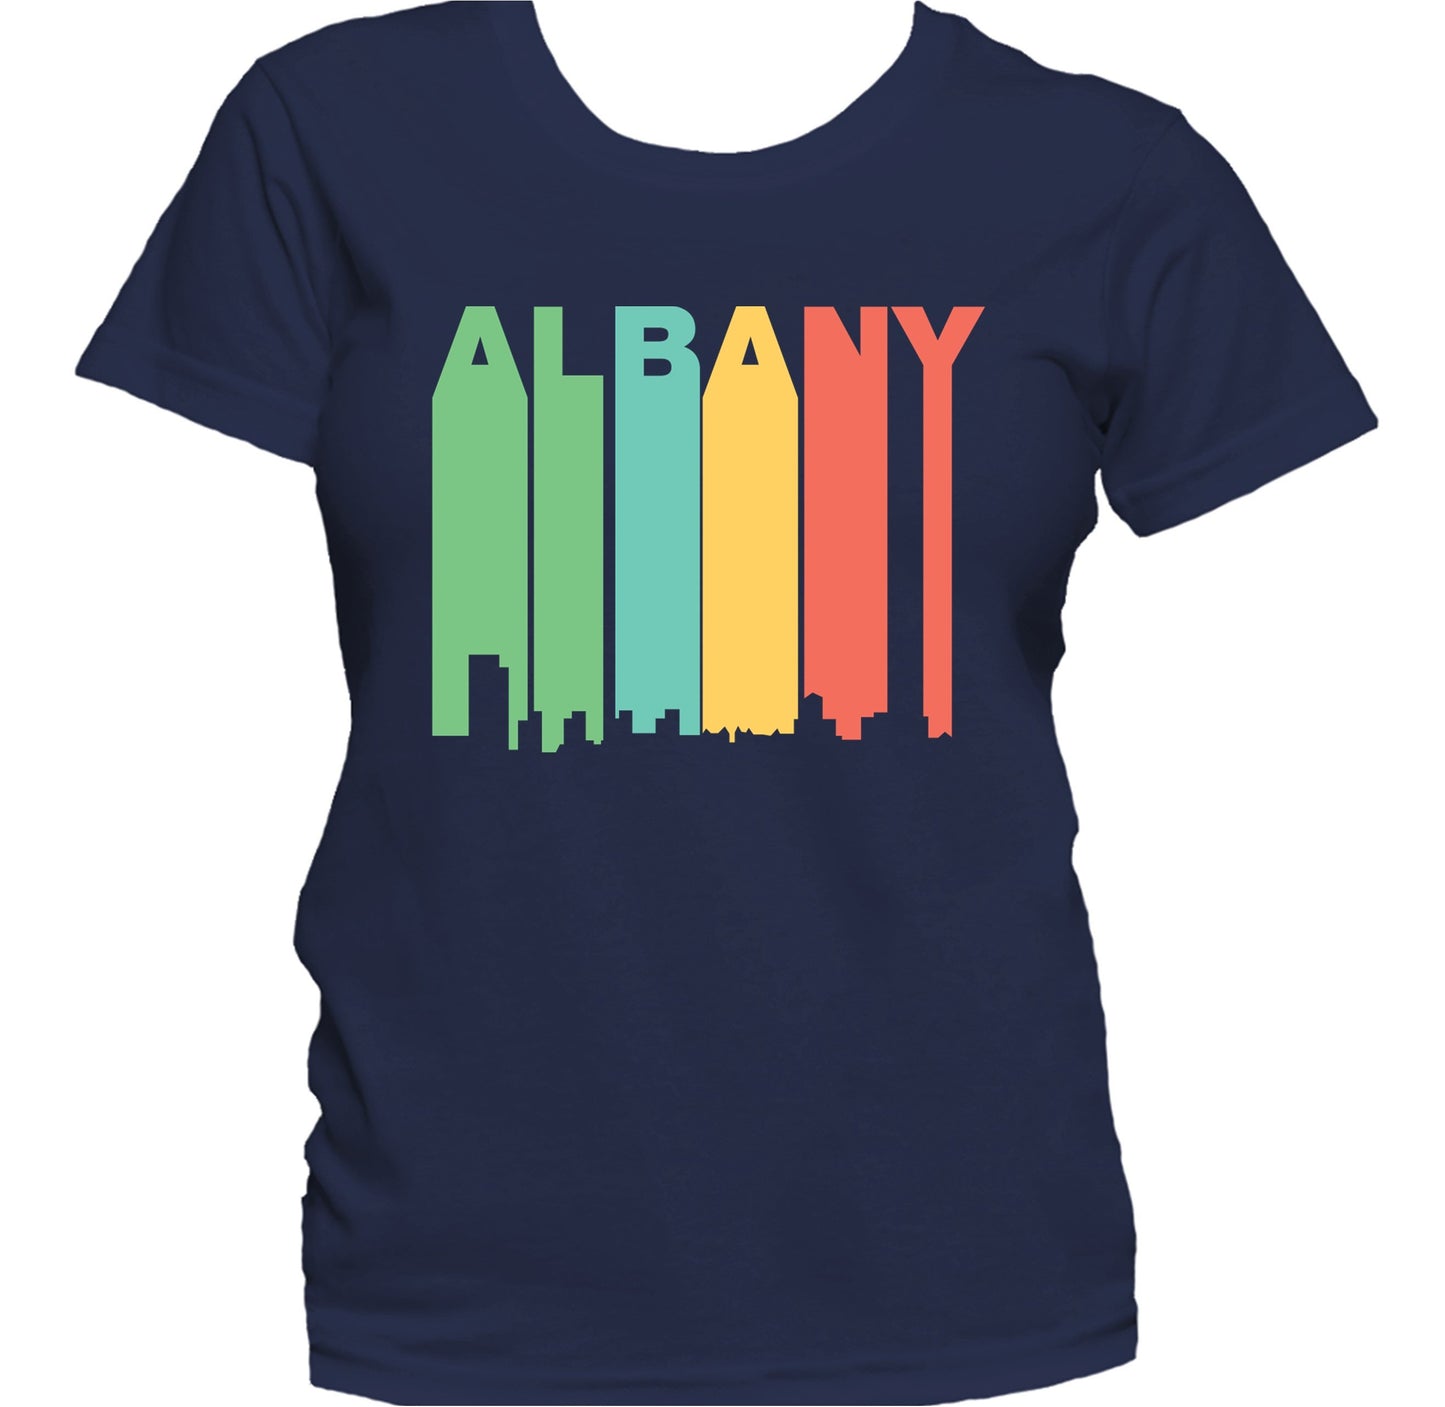 Retro 1970's Style Albany New York Skyline Women's T-Shirt